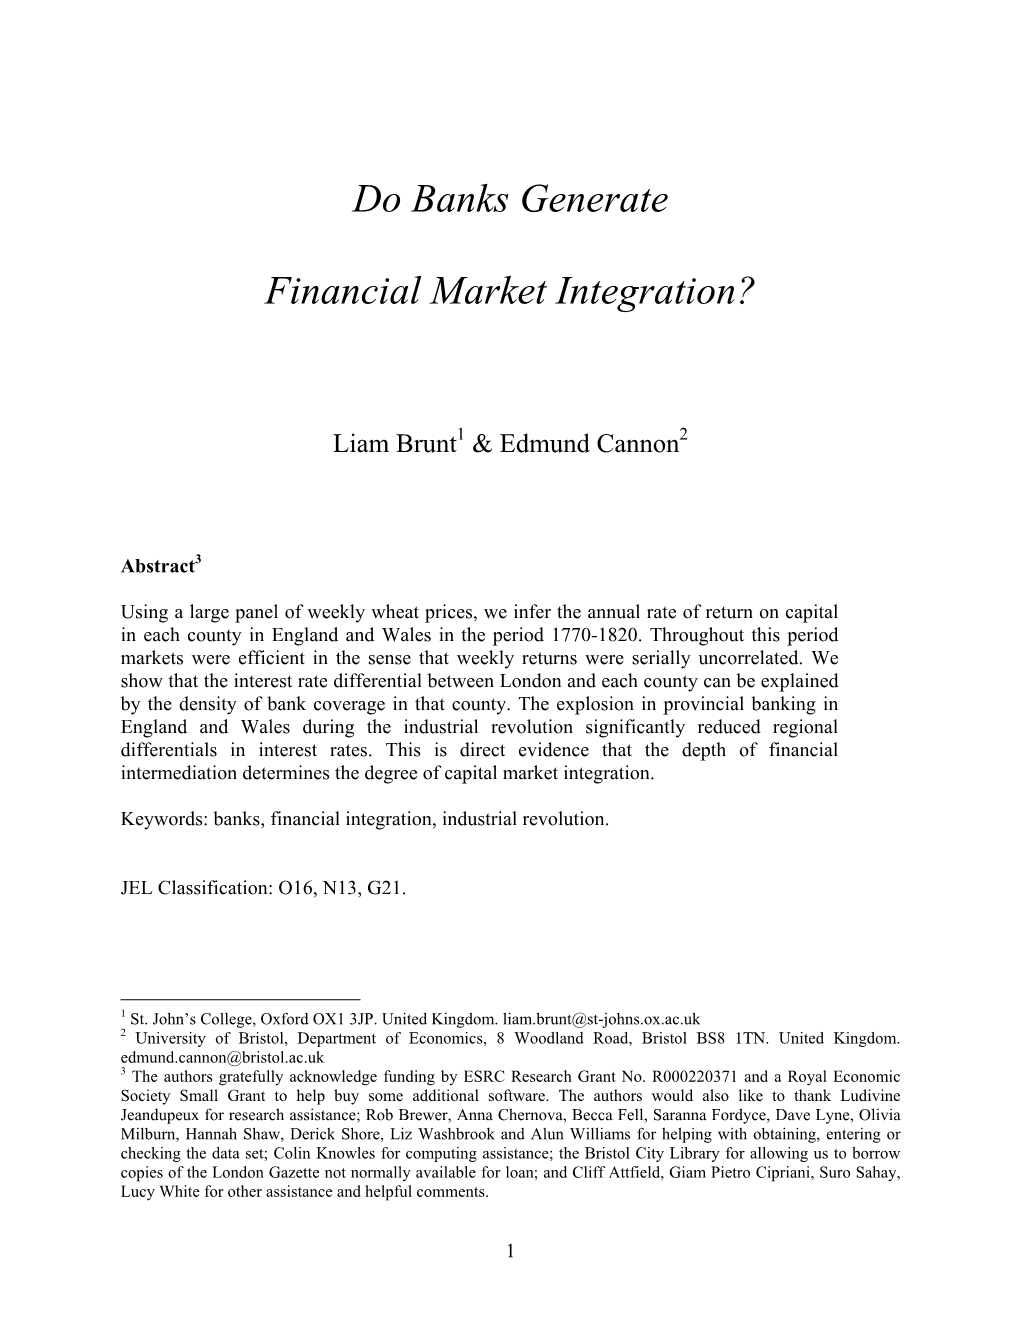 Do Banks Generate Financial Market Integration?